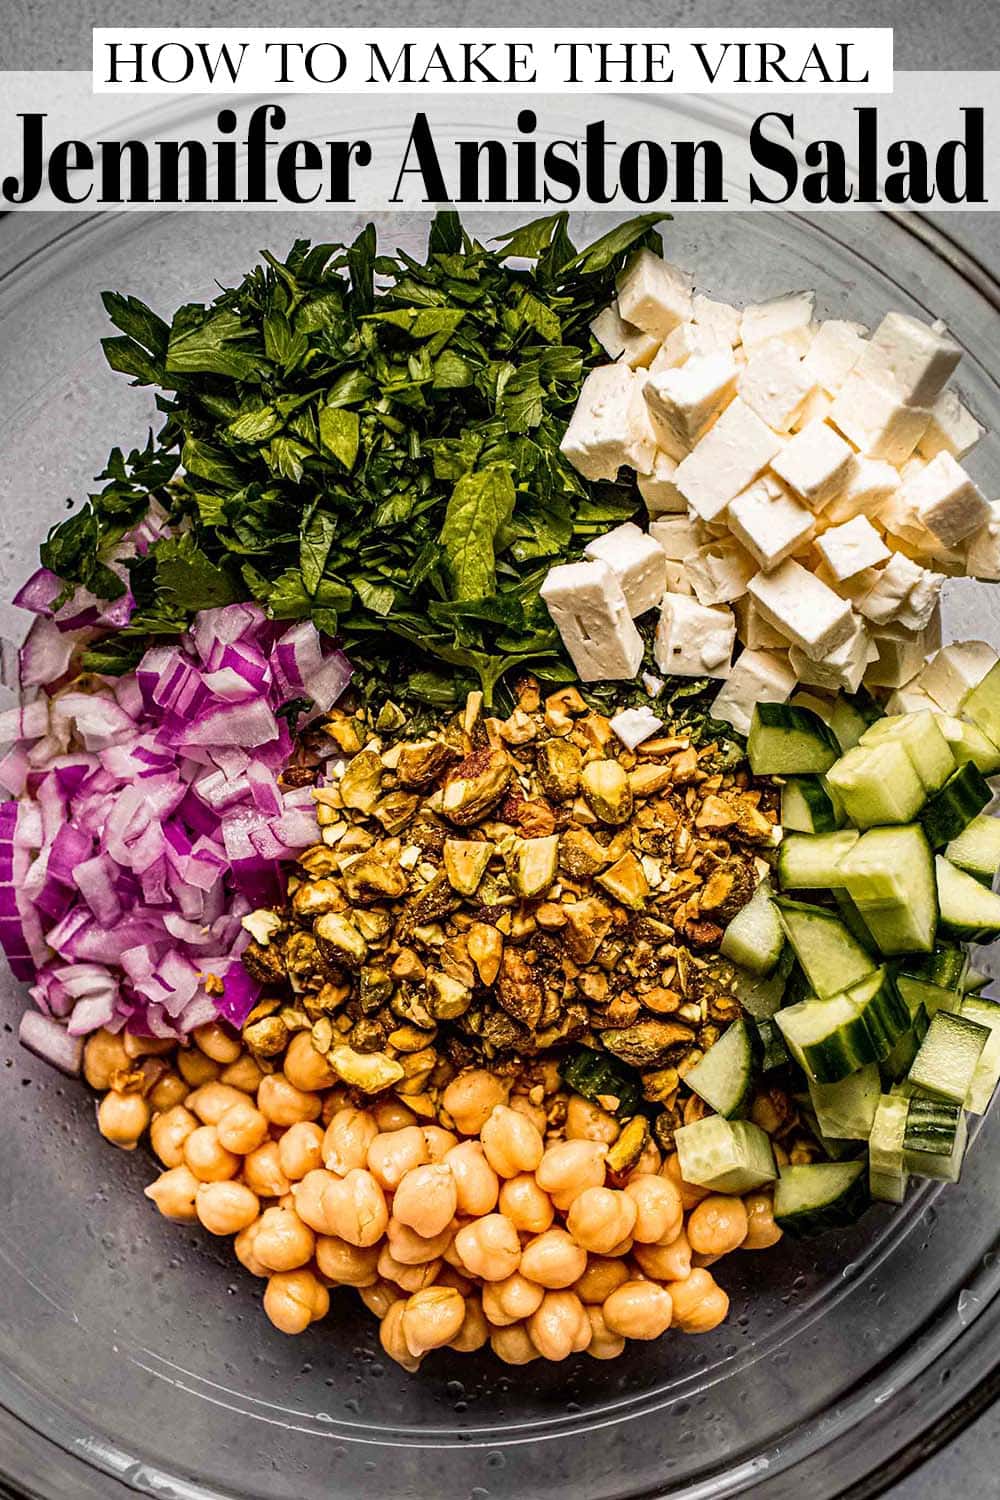 Jennifer Aniston Quinoa Salad (The Viral Recipe!) Platings + Pairings